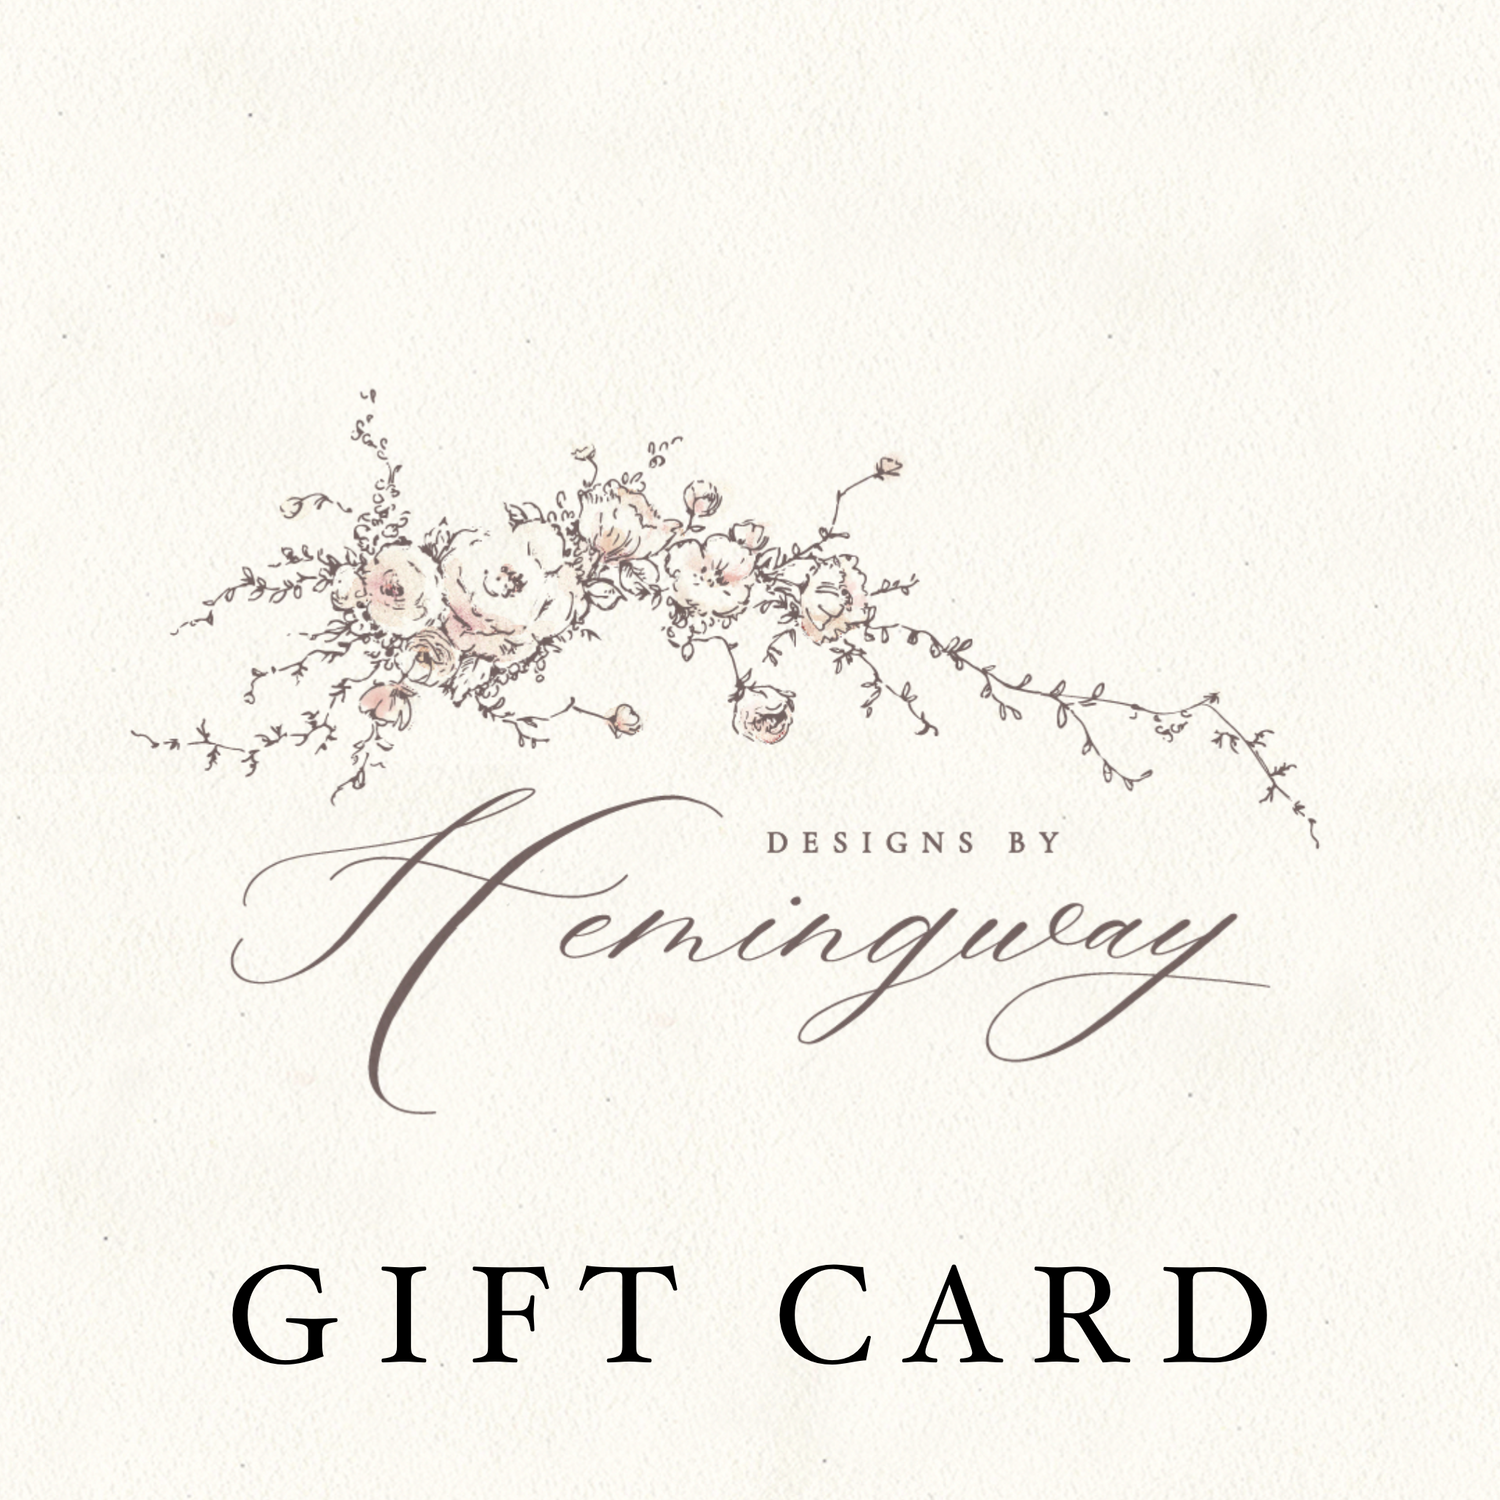 Hemingway Shop Gift Card